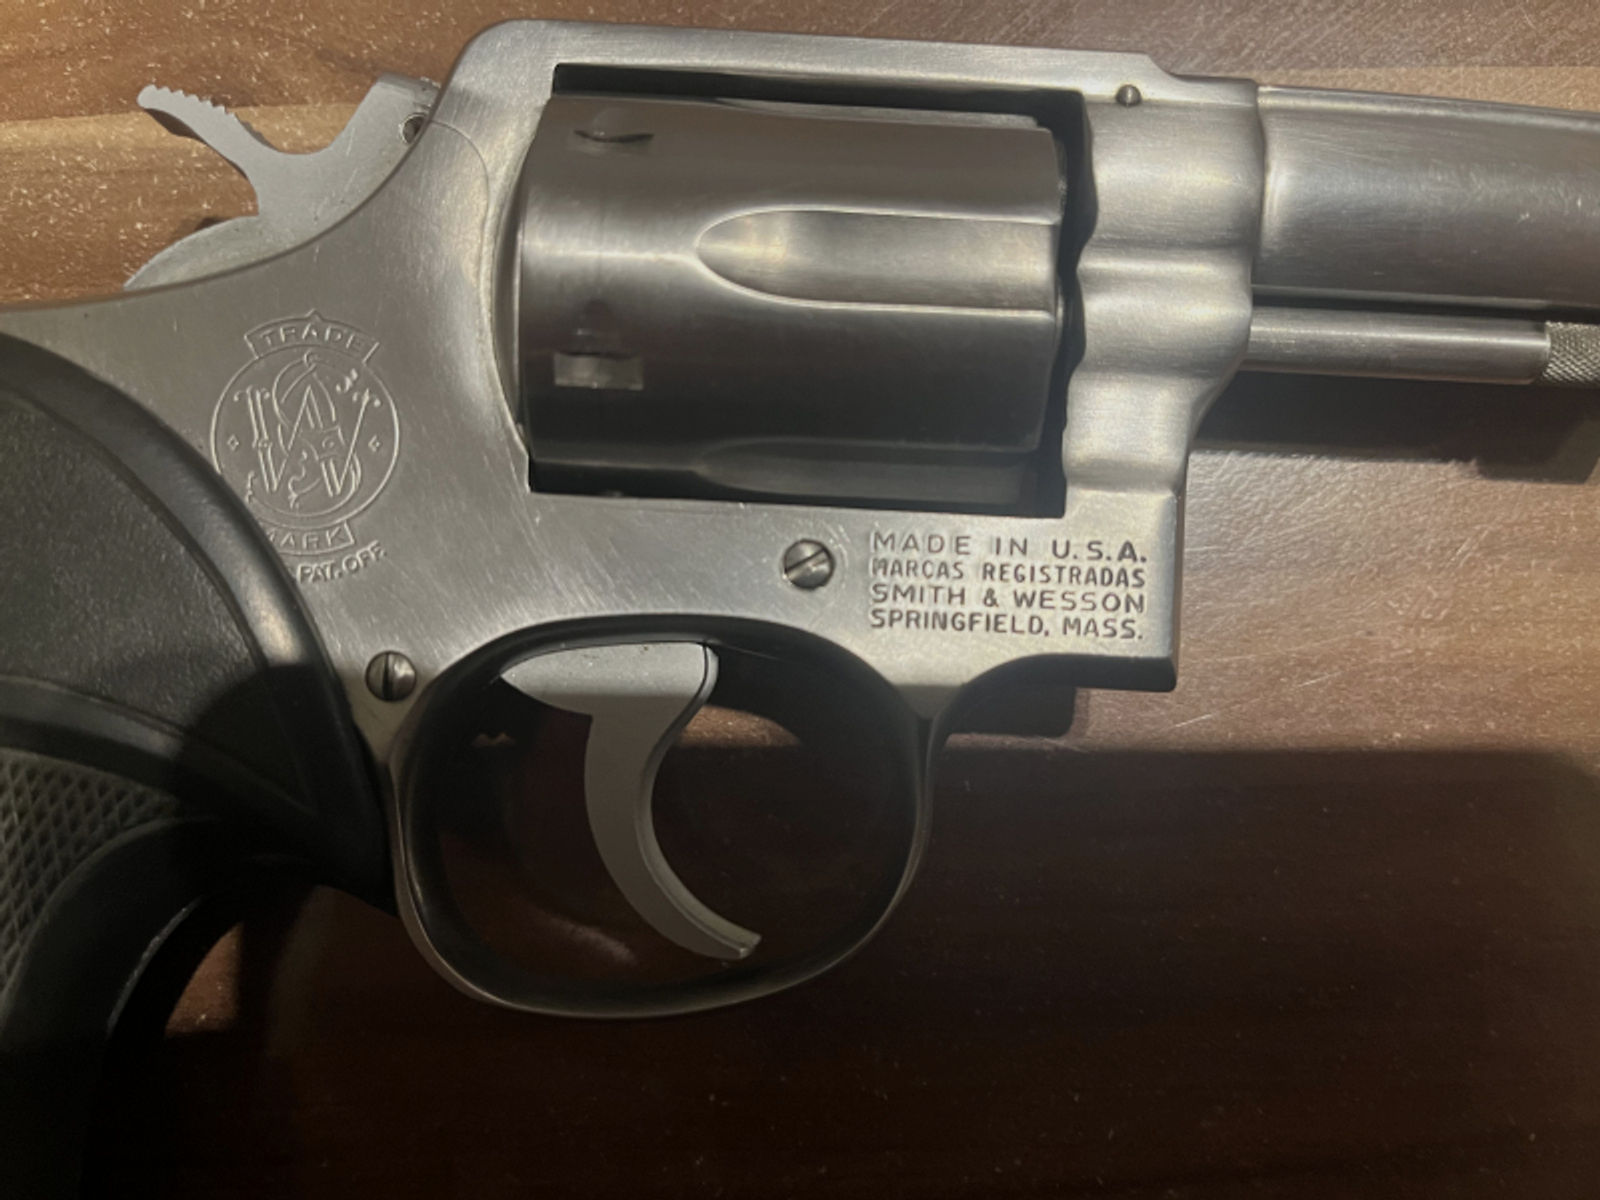 Smith & Wesson Revolver .357 Magnum